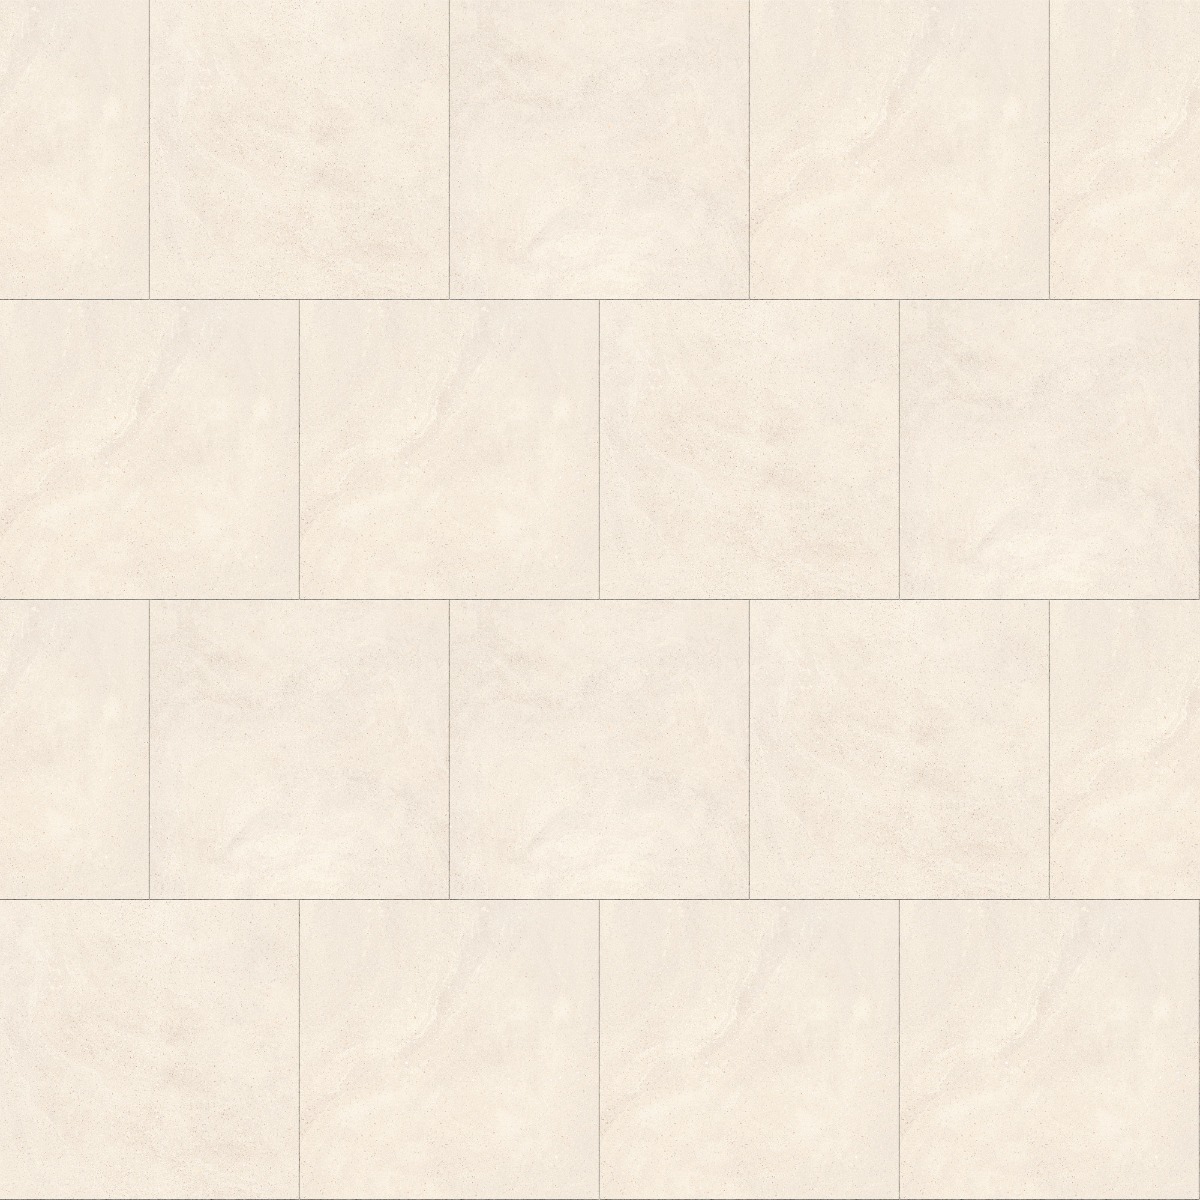 A seamless tile texture with lavish mat porcelain tile tiles arranged in a Stretcher pattern